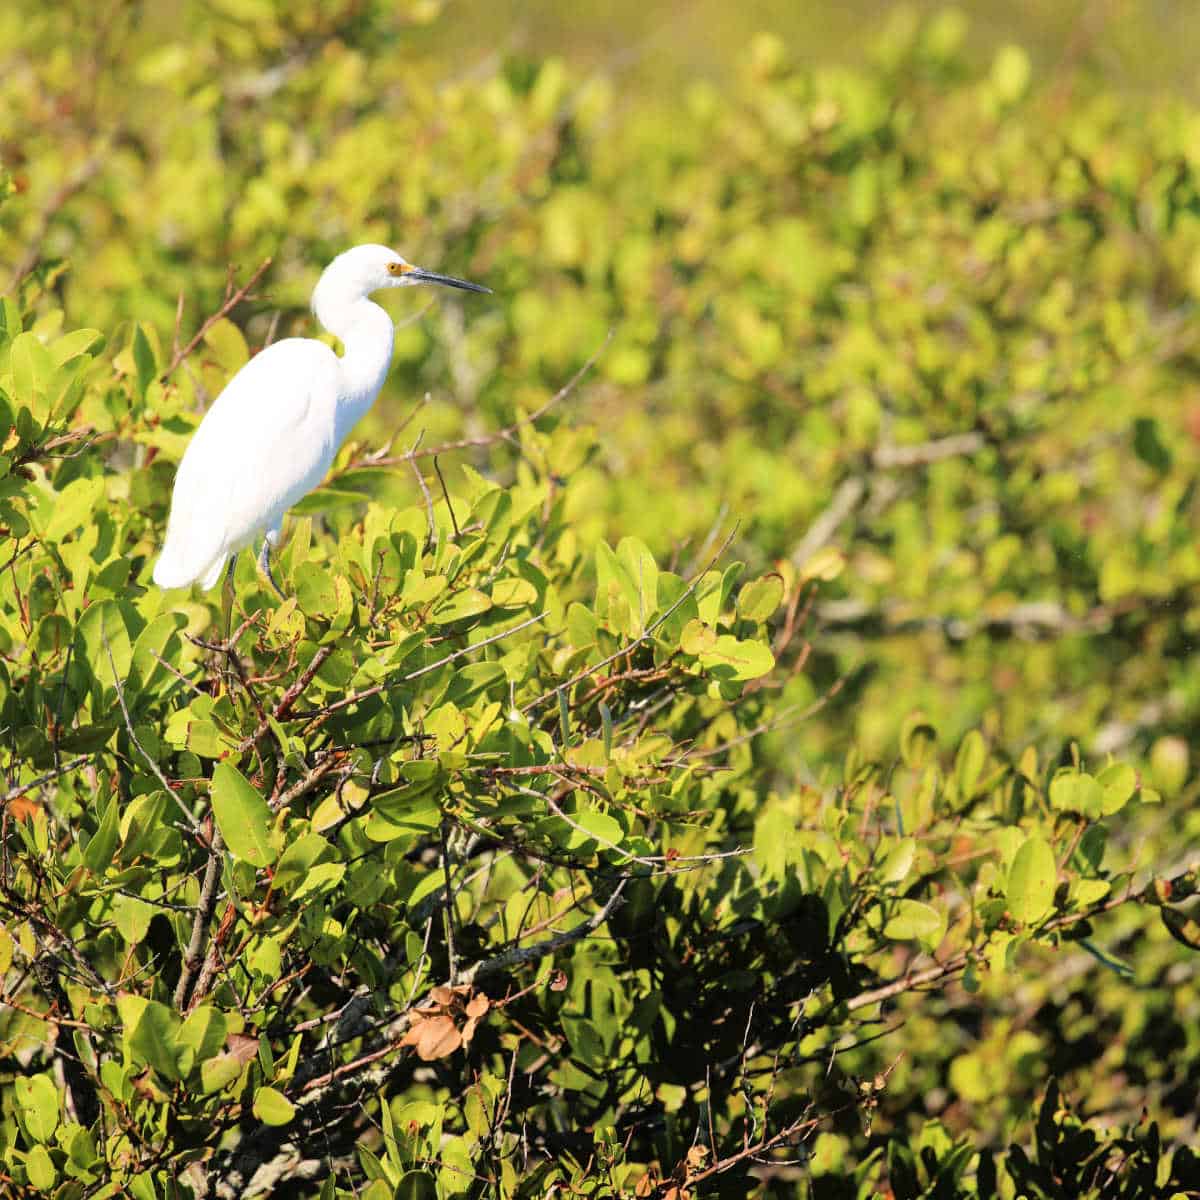 White egret in a green bush